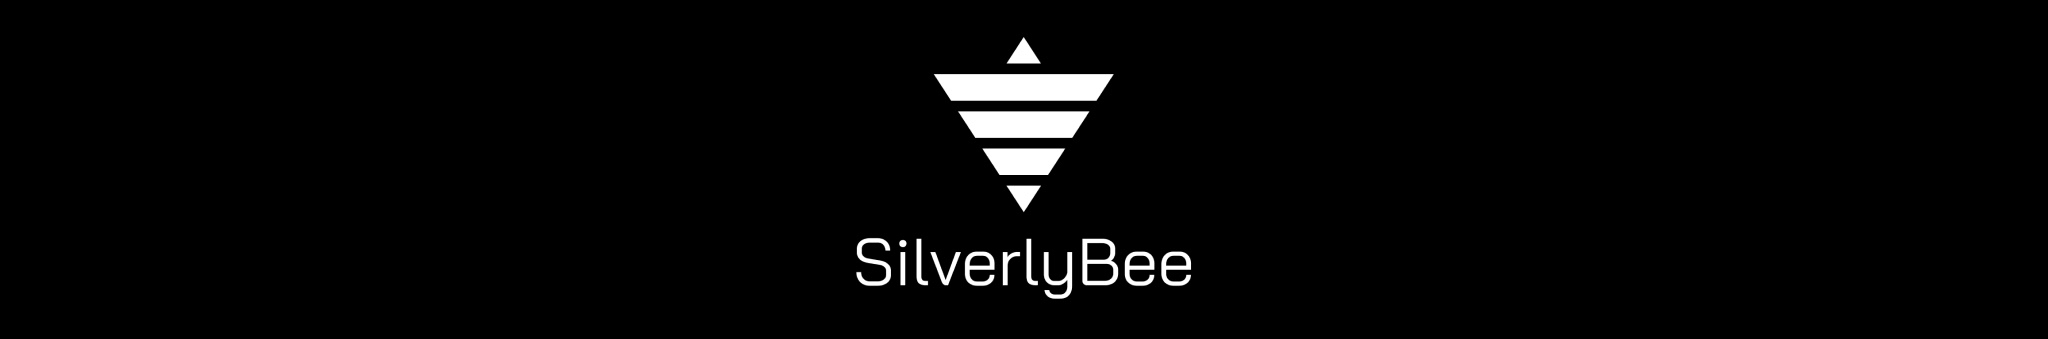 SilverlyBee